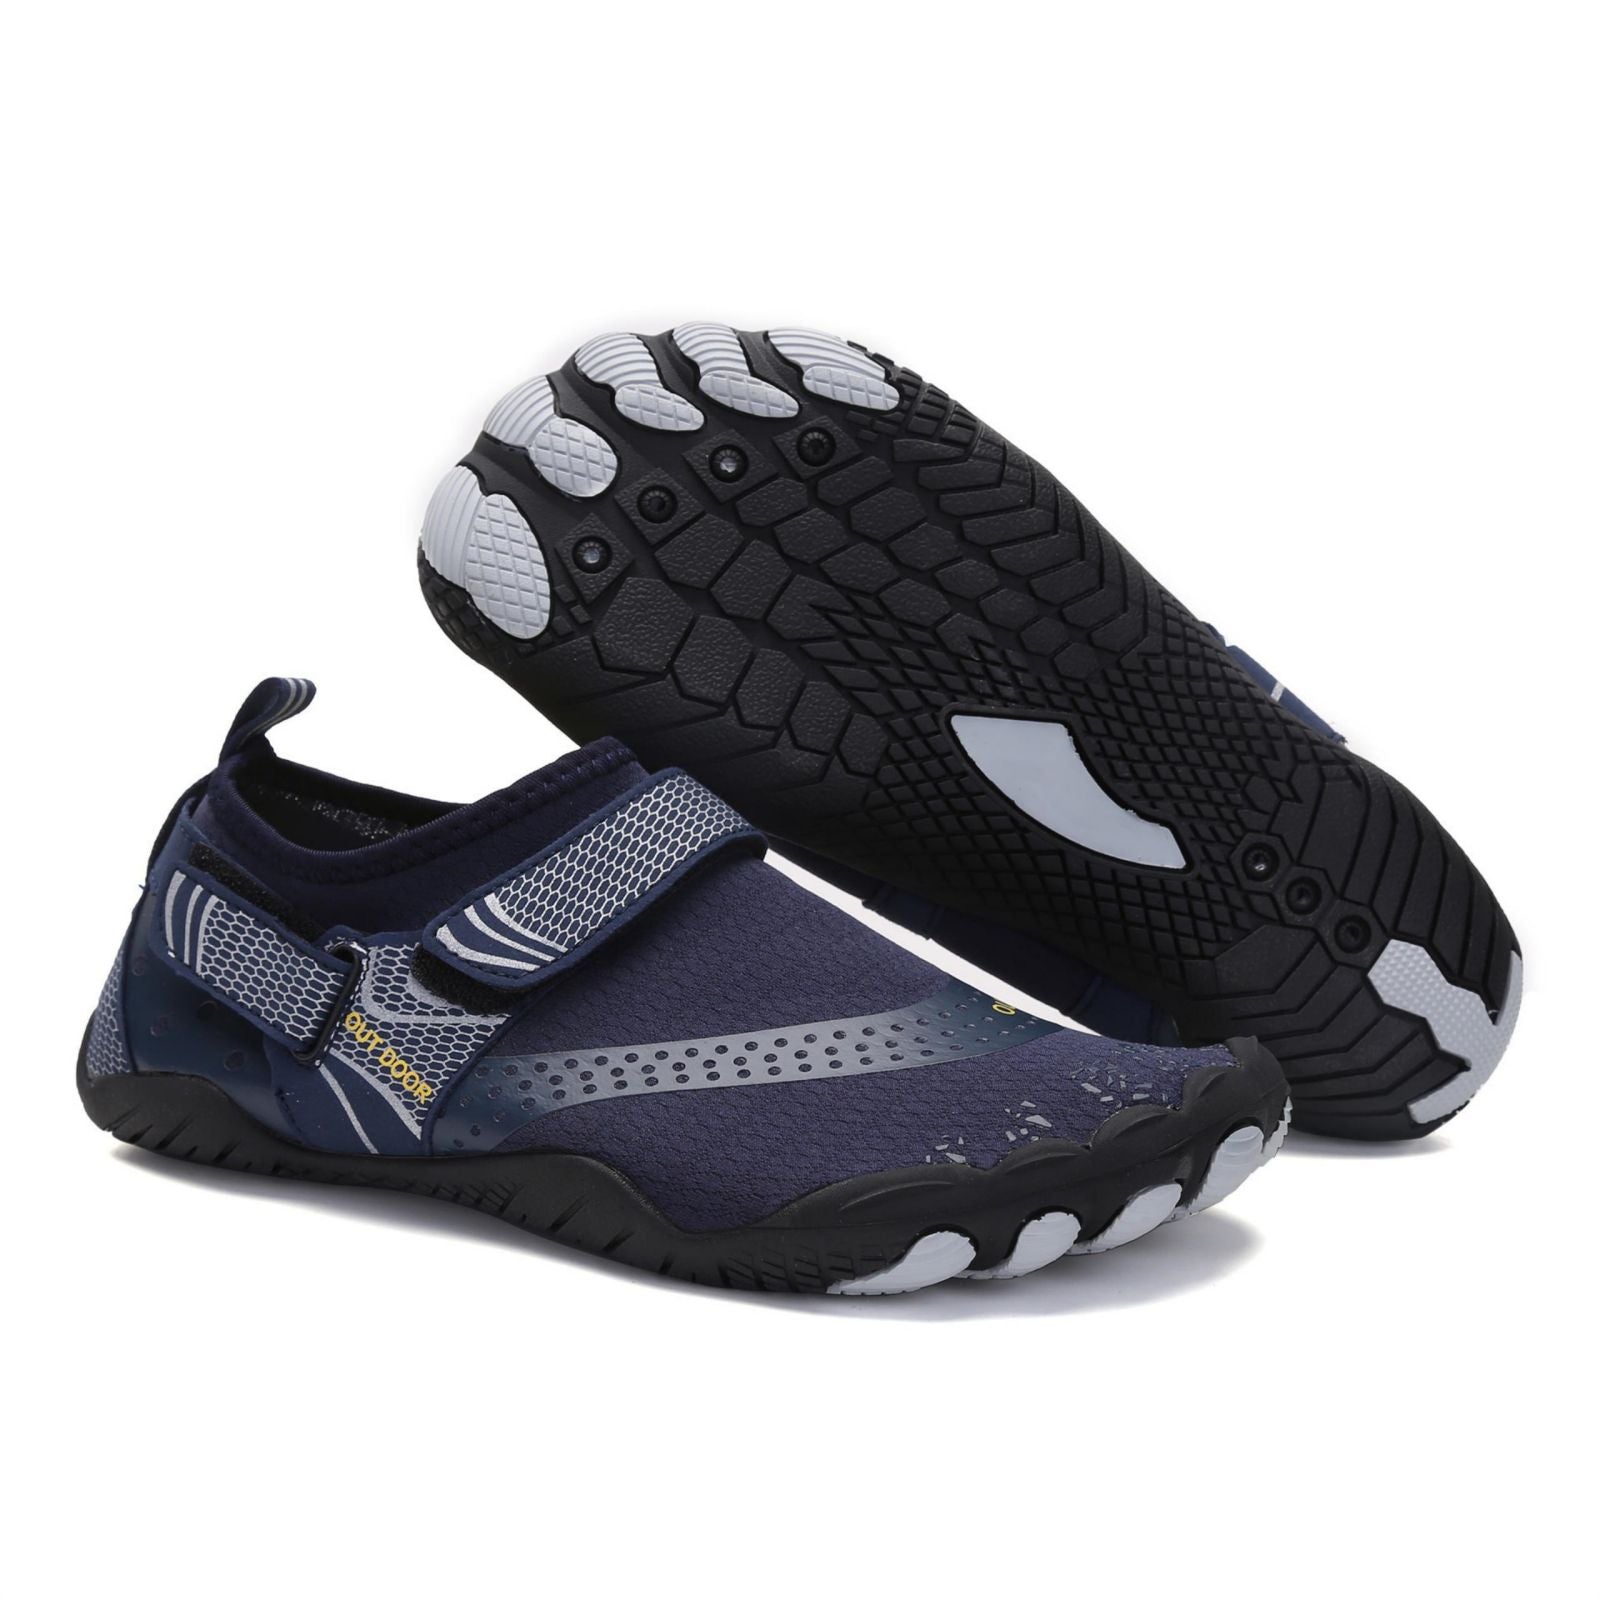 Water Shoes for Men & Women - Barefoot Non-slip Aqua Sports Quick Dry Shoes (Unisex)